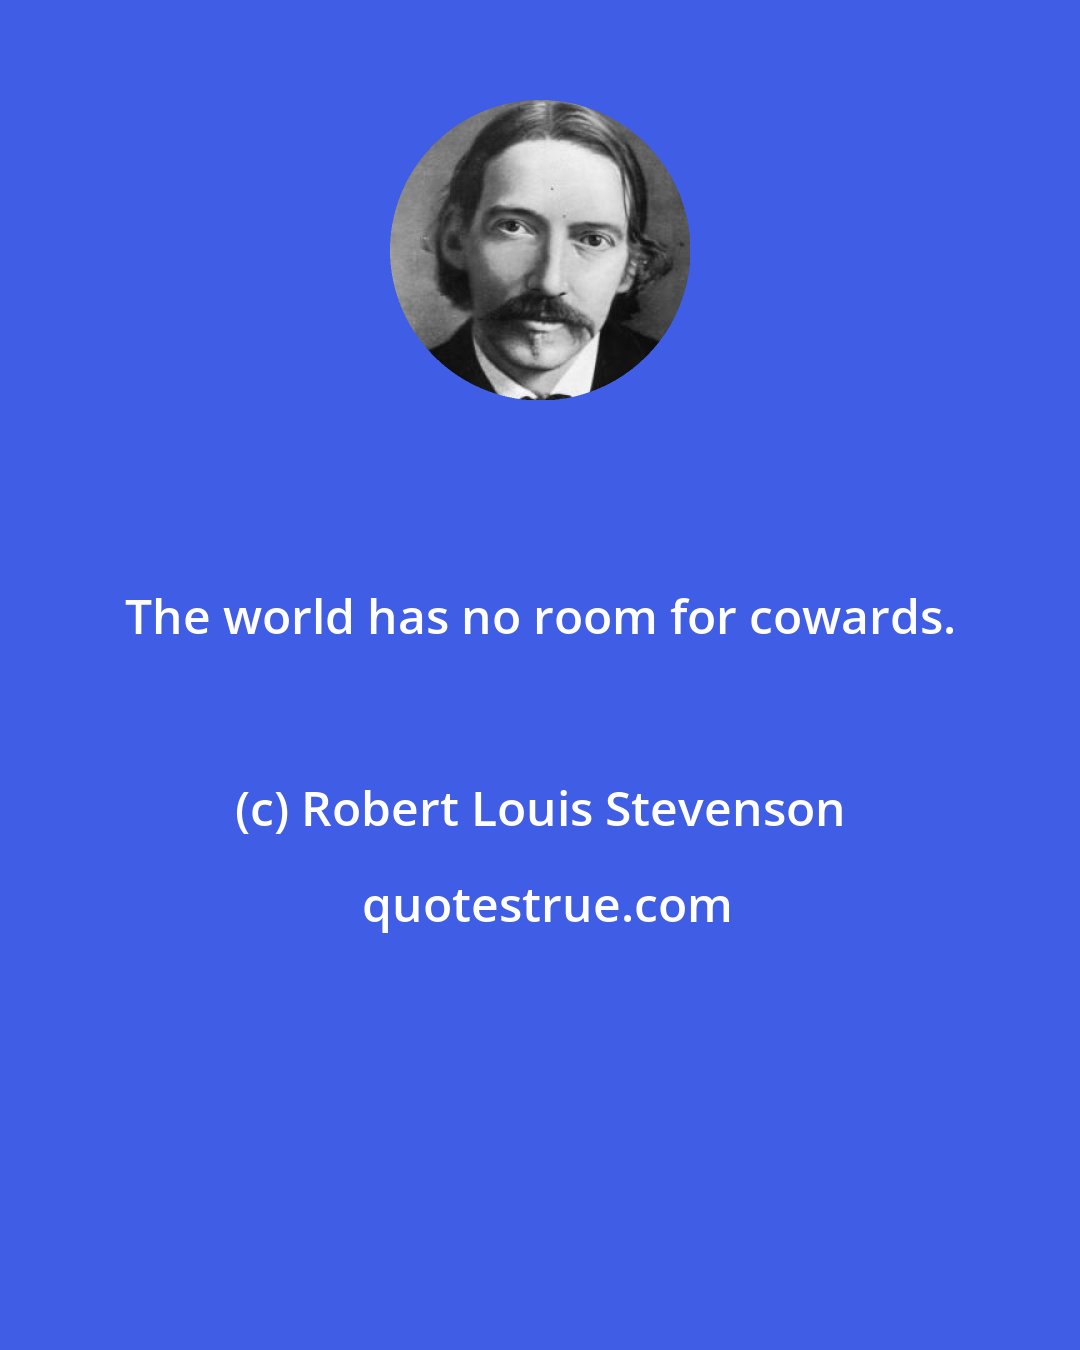 Robert Louis Stevenson: The world has no room for cowards.